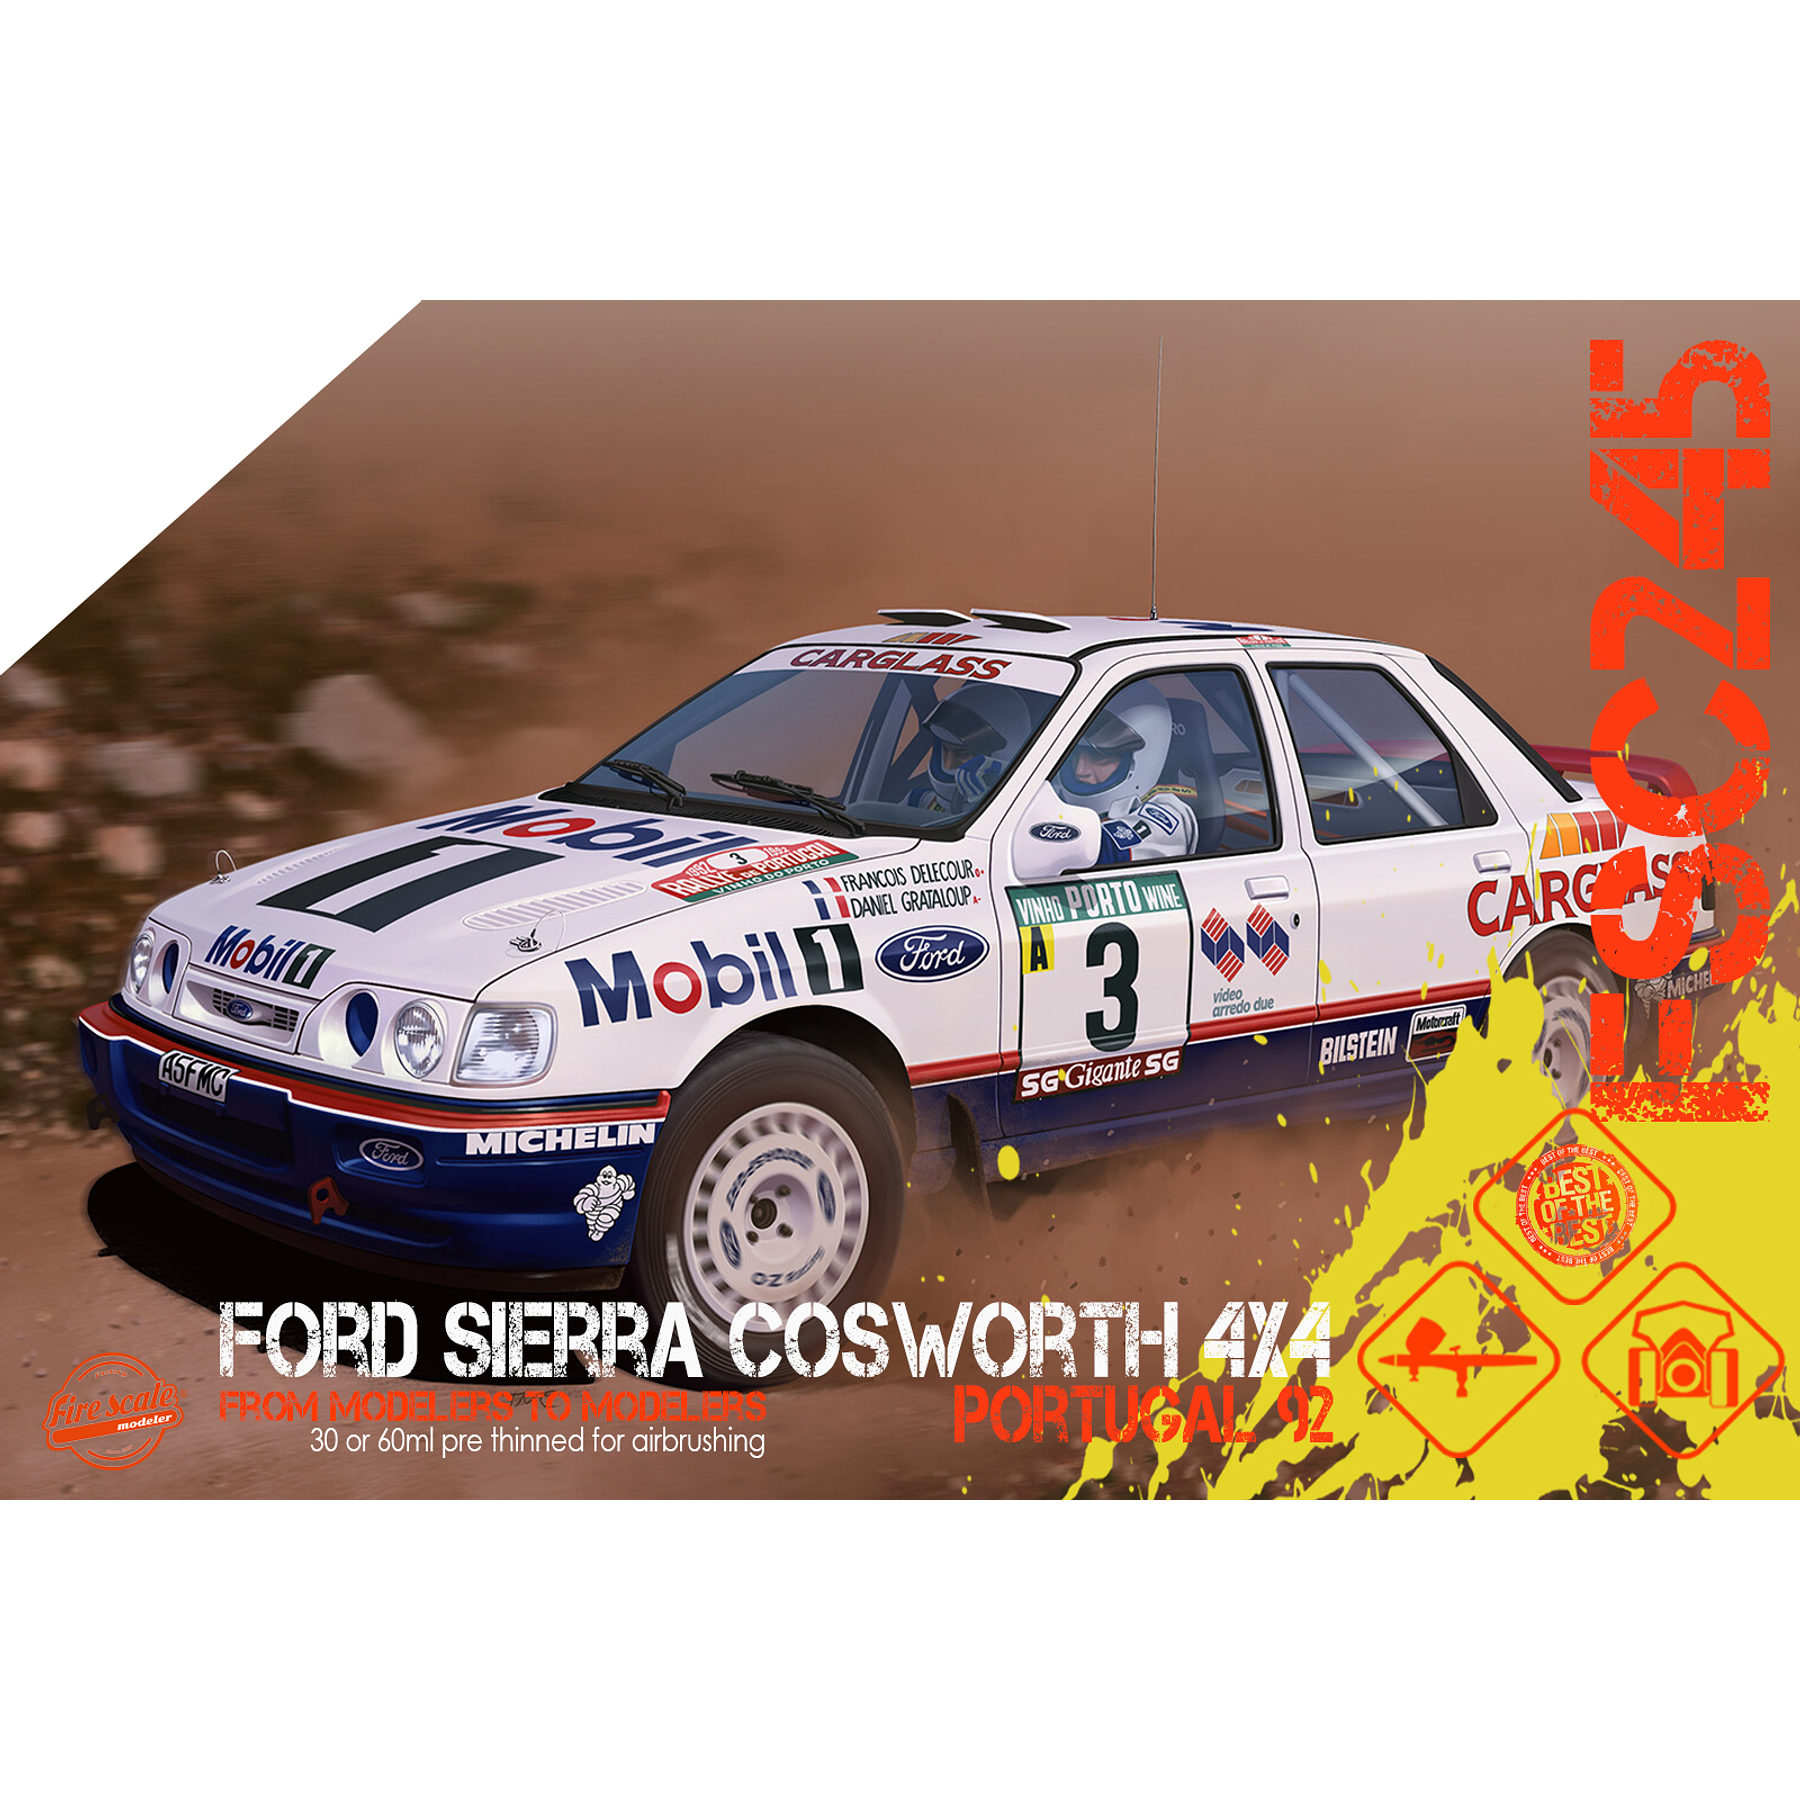 Ford Sierra Cosworth 4x4 Portugal 92 - White